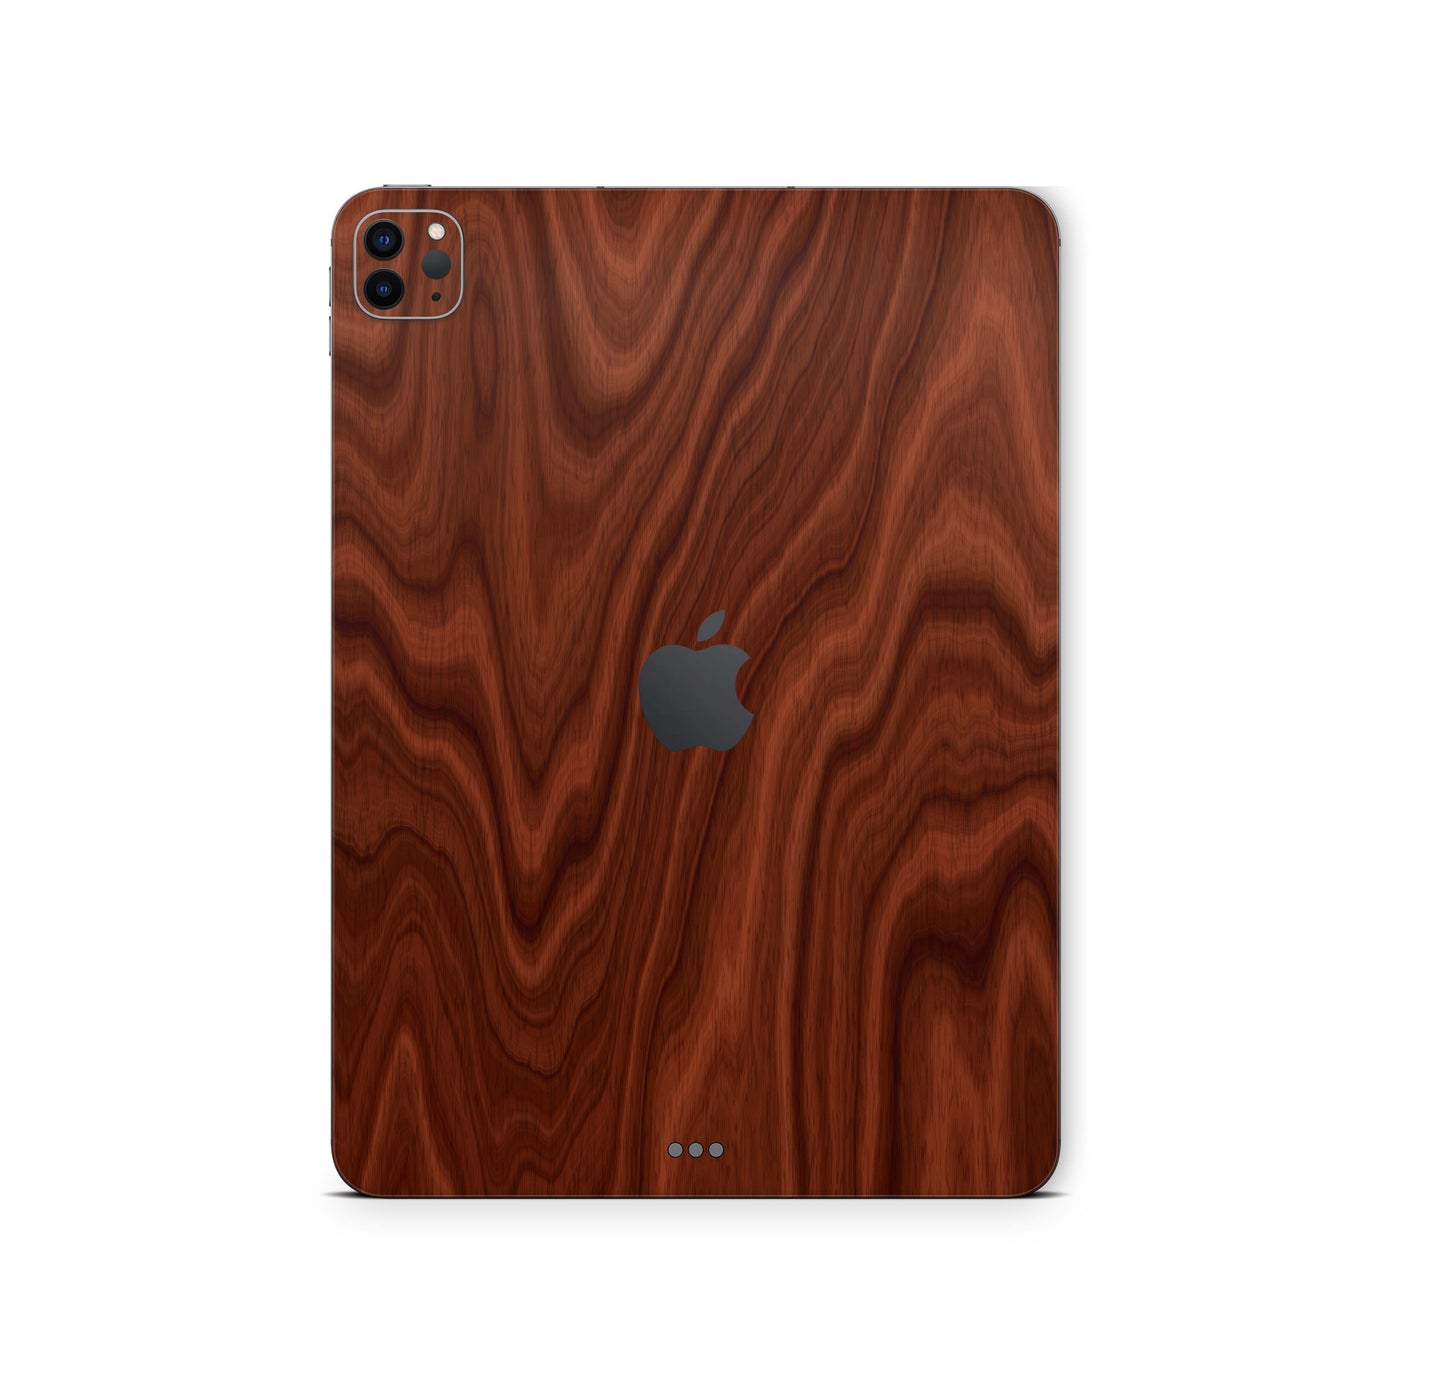 iPad Pro Skin 11" 3.Generation M1 2021 Design Cover Folie Vinyl Skins & Wraps Aufkleber Skins4u Rosewood  